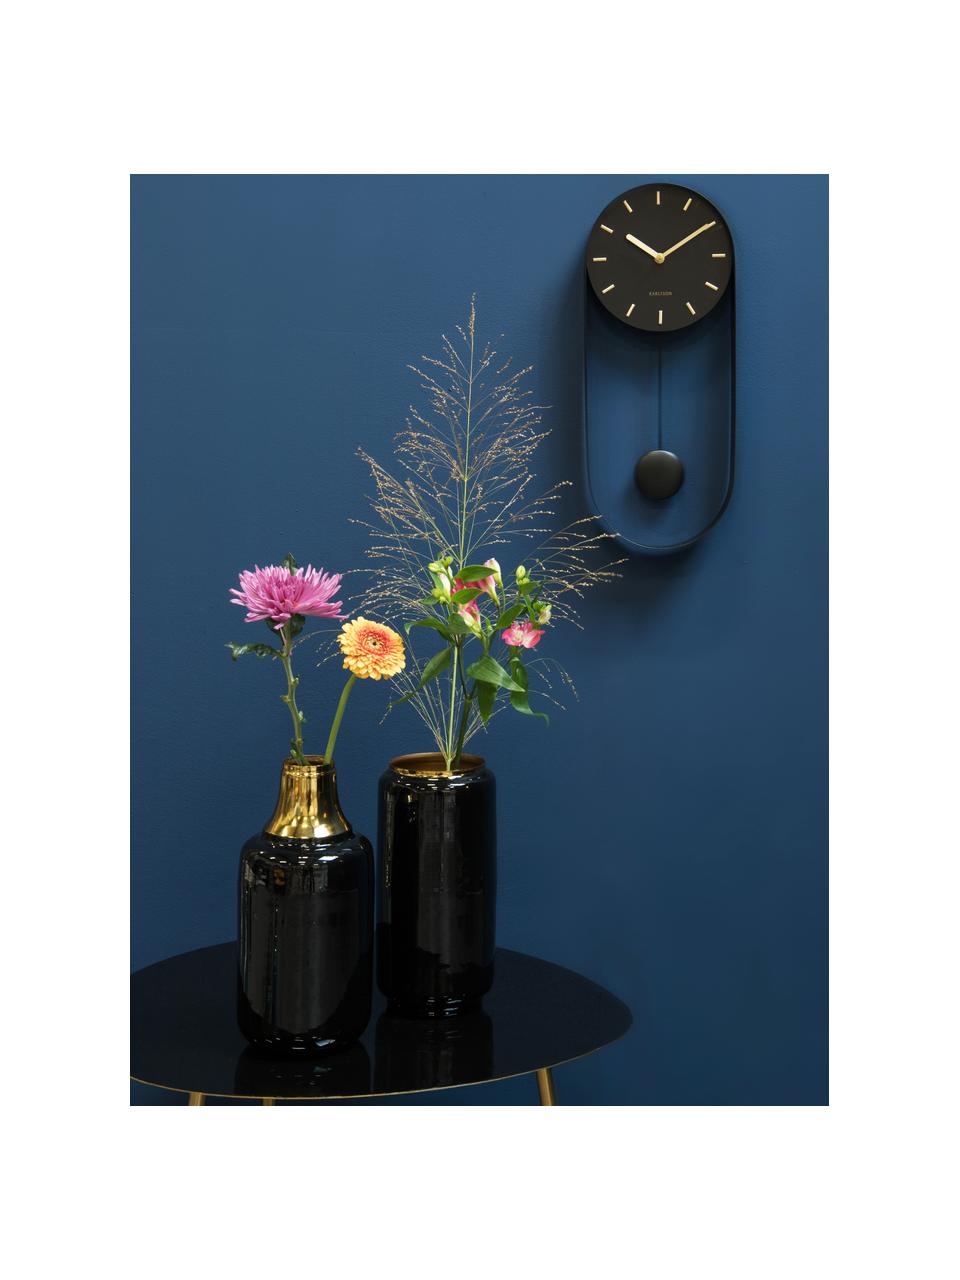 Reloj de pared Charm, Metal recubierto, Negro, An 20 x Al 50 cm